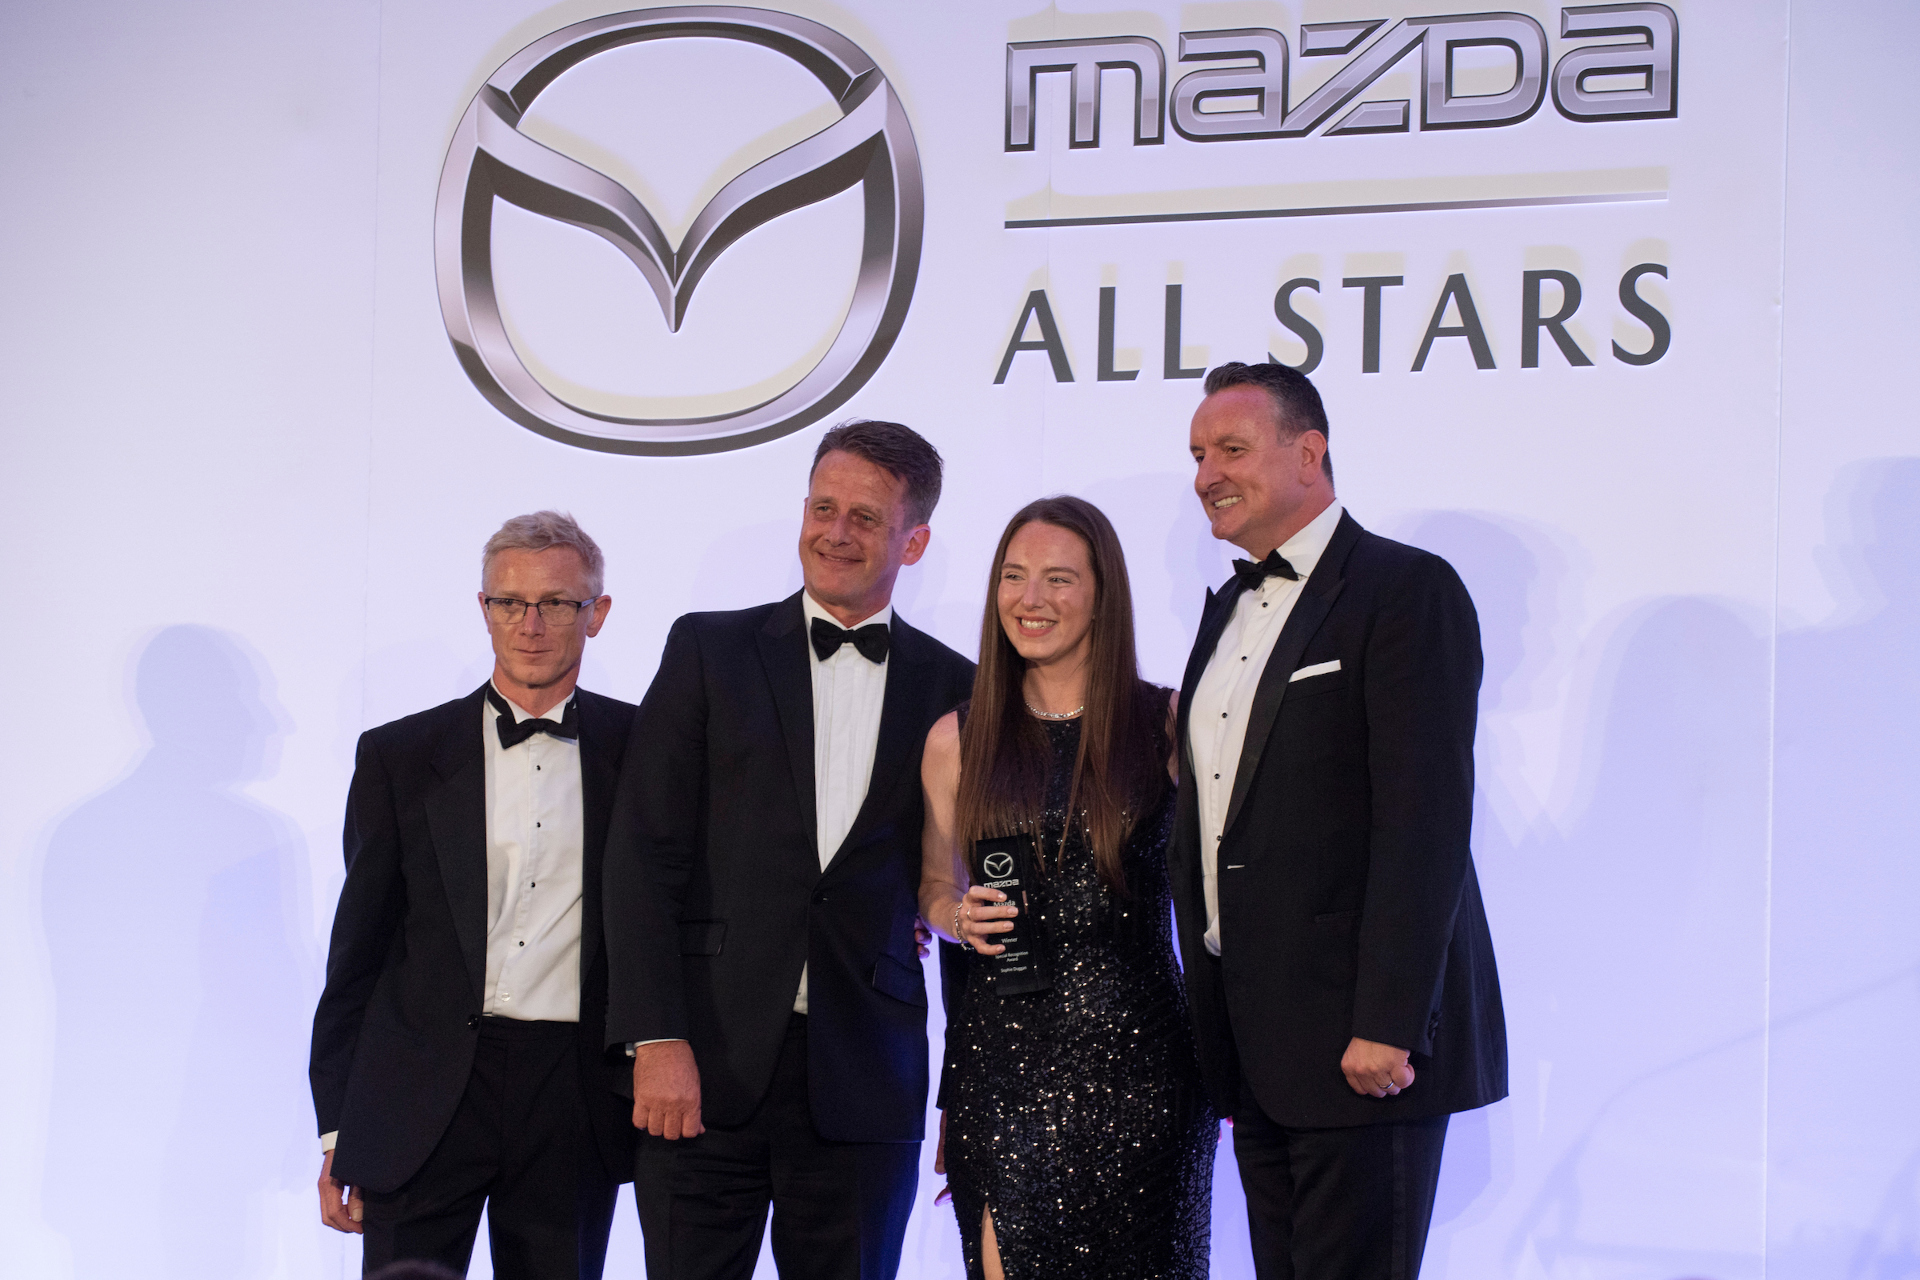 Mazda Annual All Stars Awards